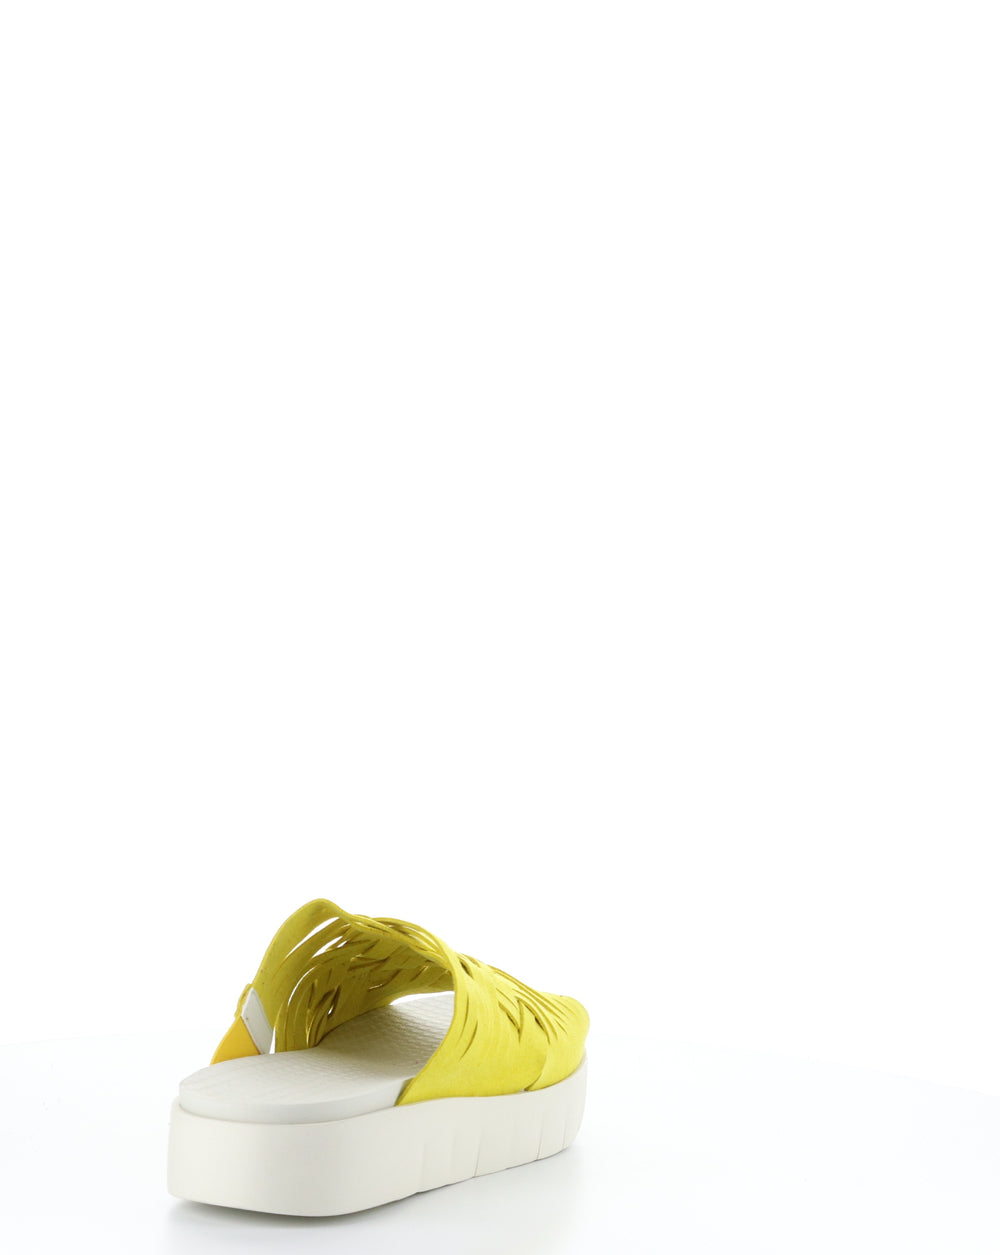 RISED YELLOW Slip-on Sandals